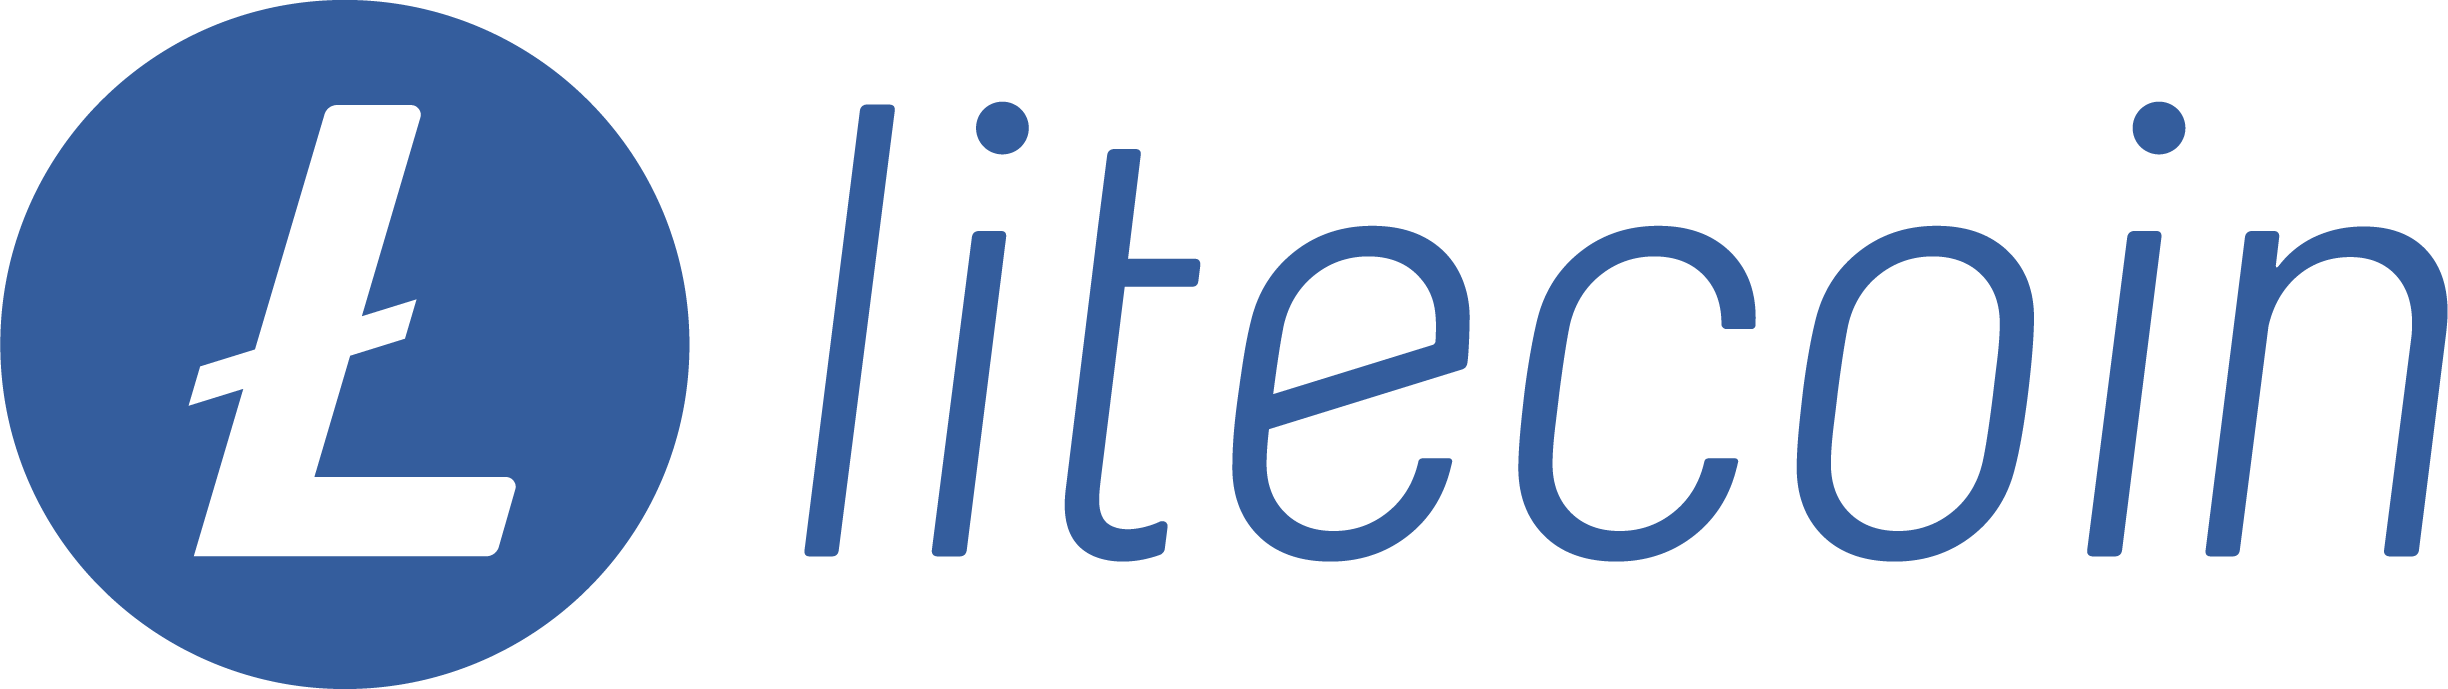 Litecoin Logo - File:6 Full Logo S-2.png - Wikimedia Commons